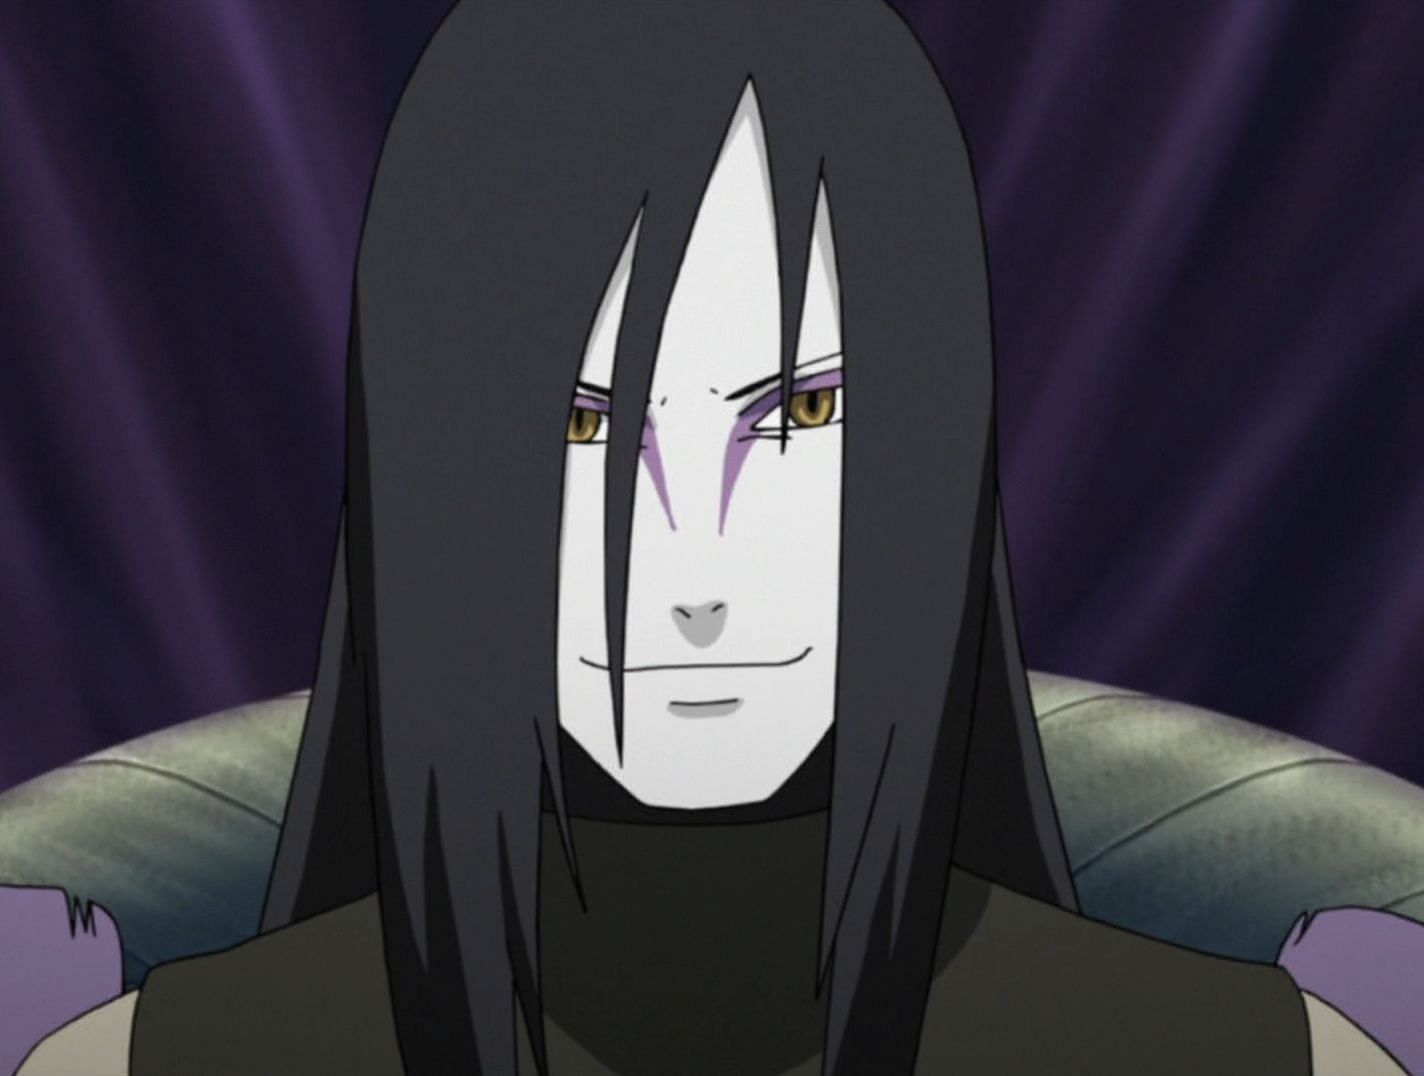 Orochimaru smiling (Image via Narutopedia.com)